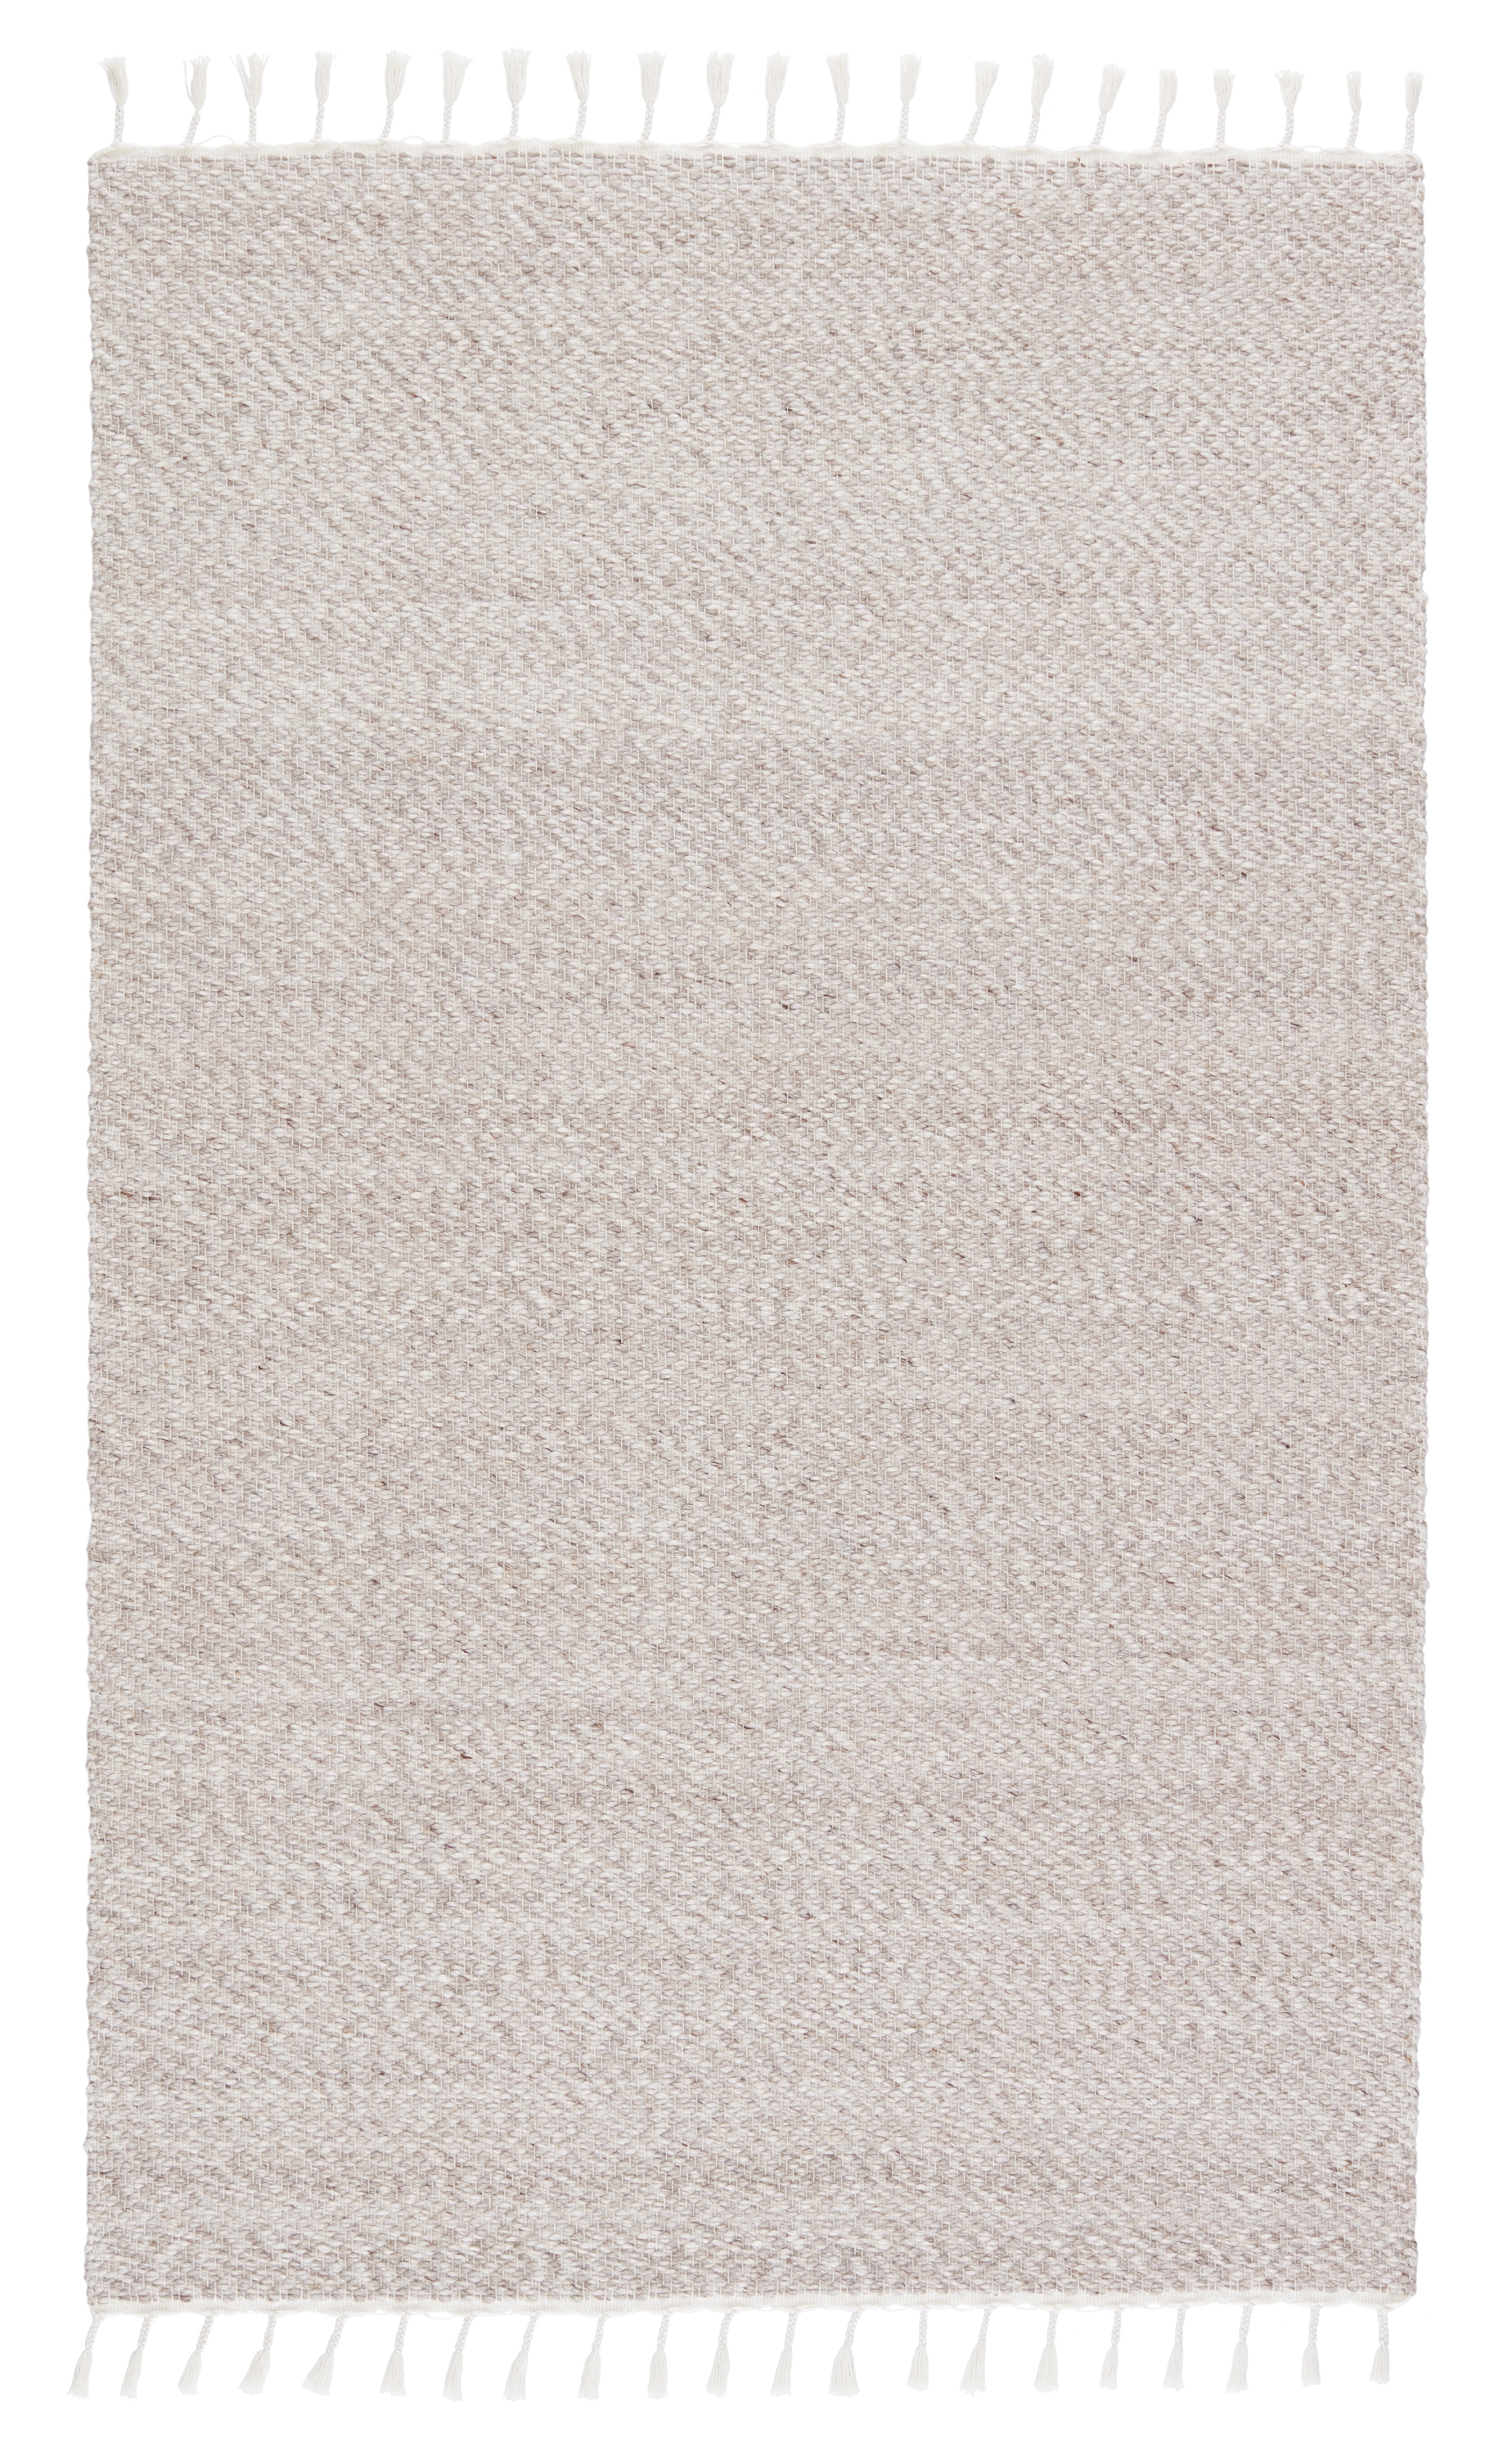 Adria Indoor/ Outdoor Solid Cream/ Gray Area Rug (8'X10') - Image 0